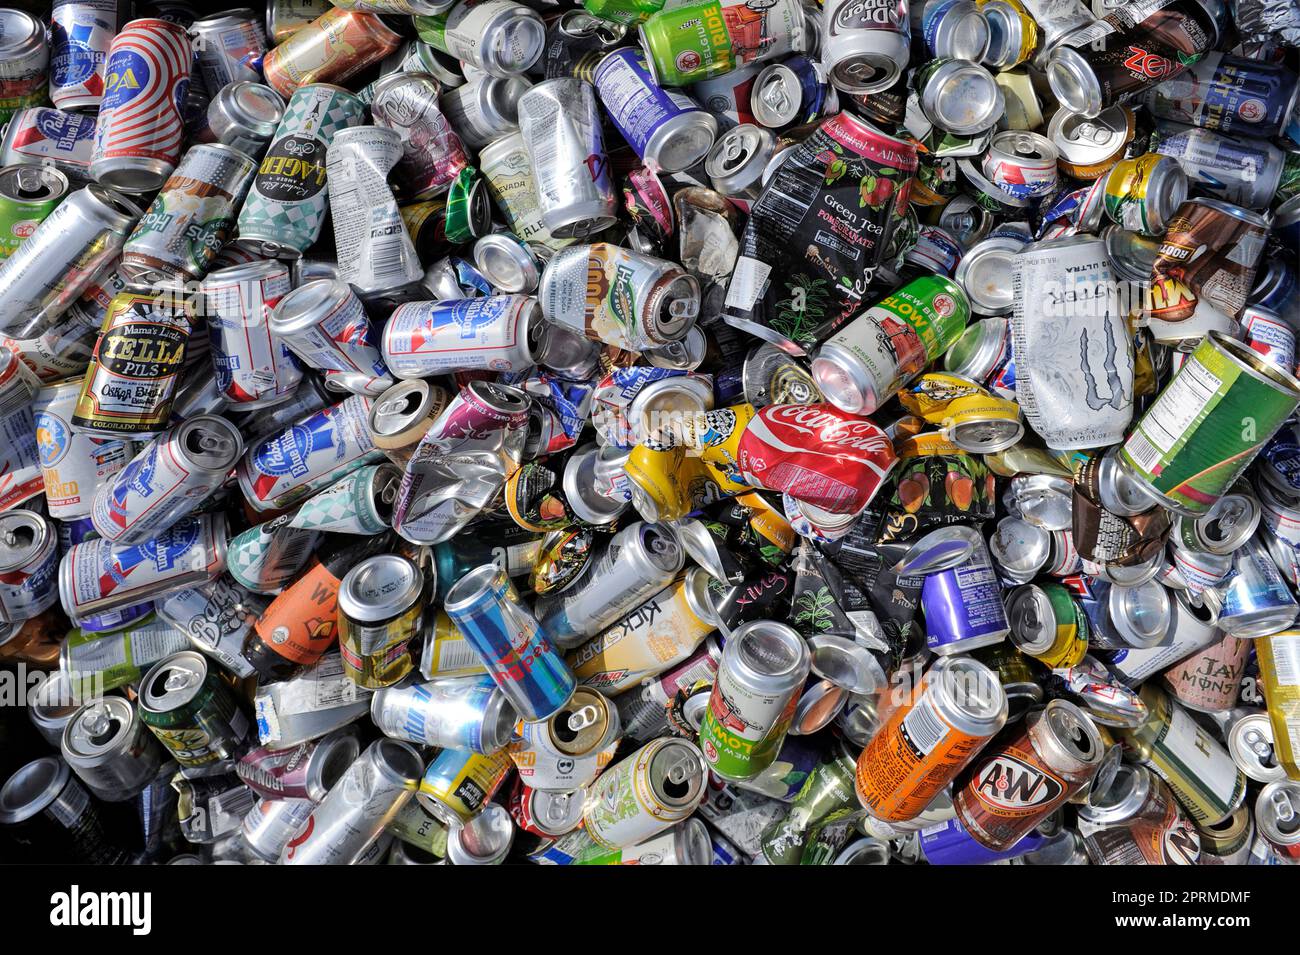 MOAB, Utah, USA, Juni 4,2015: Leere Getränkedosen zum Recycling in einem Container am Straßenrand. Stockfoto